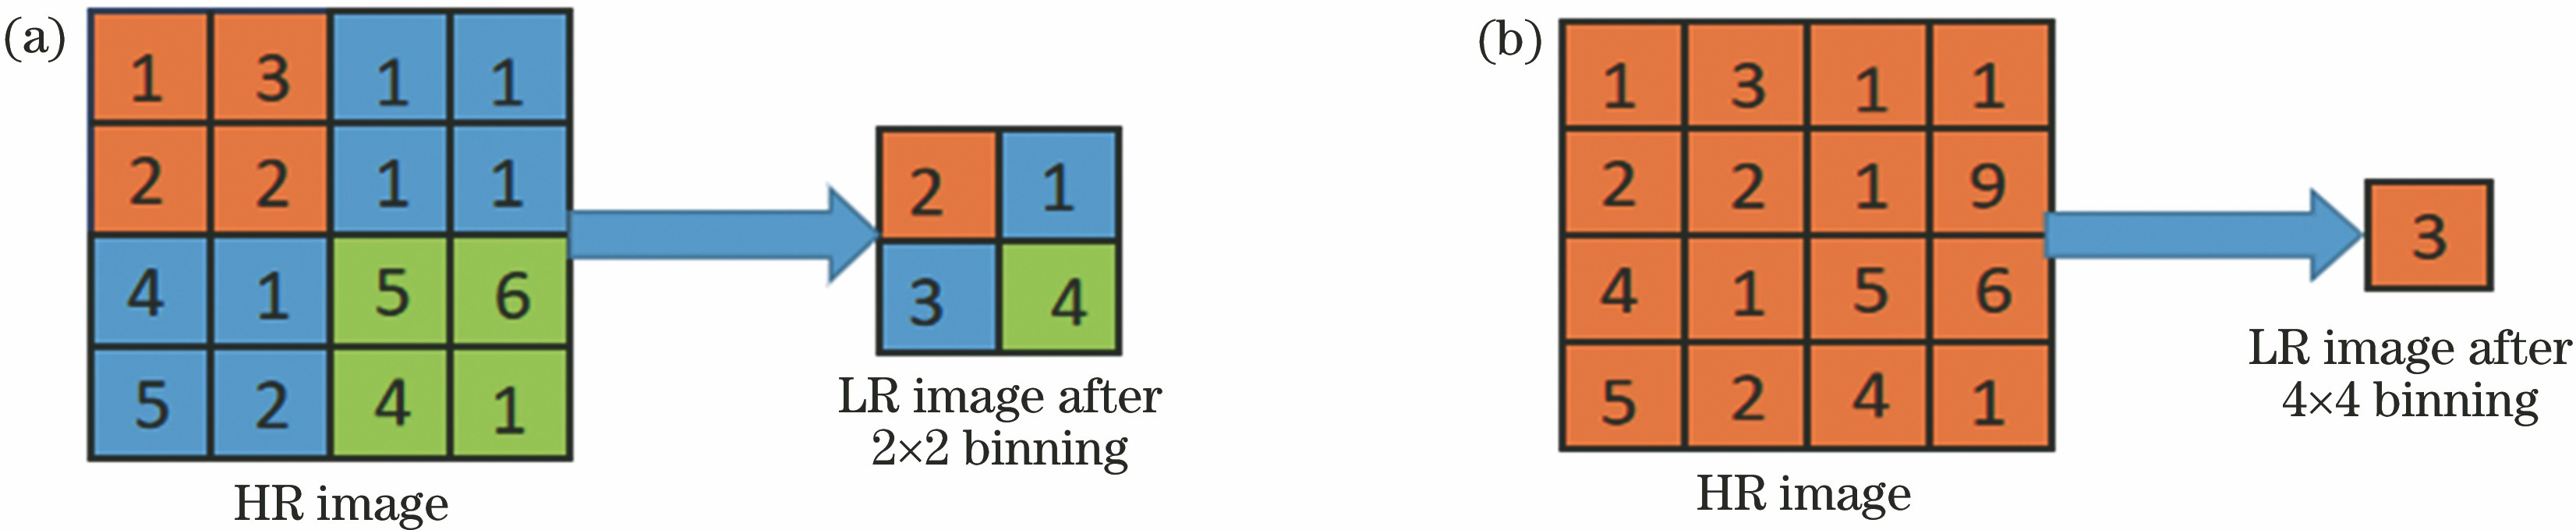 Operating process. (a) 2×2 Binning; (b) 4×4 Binning